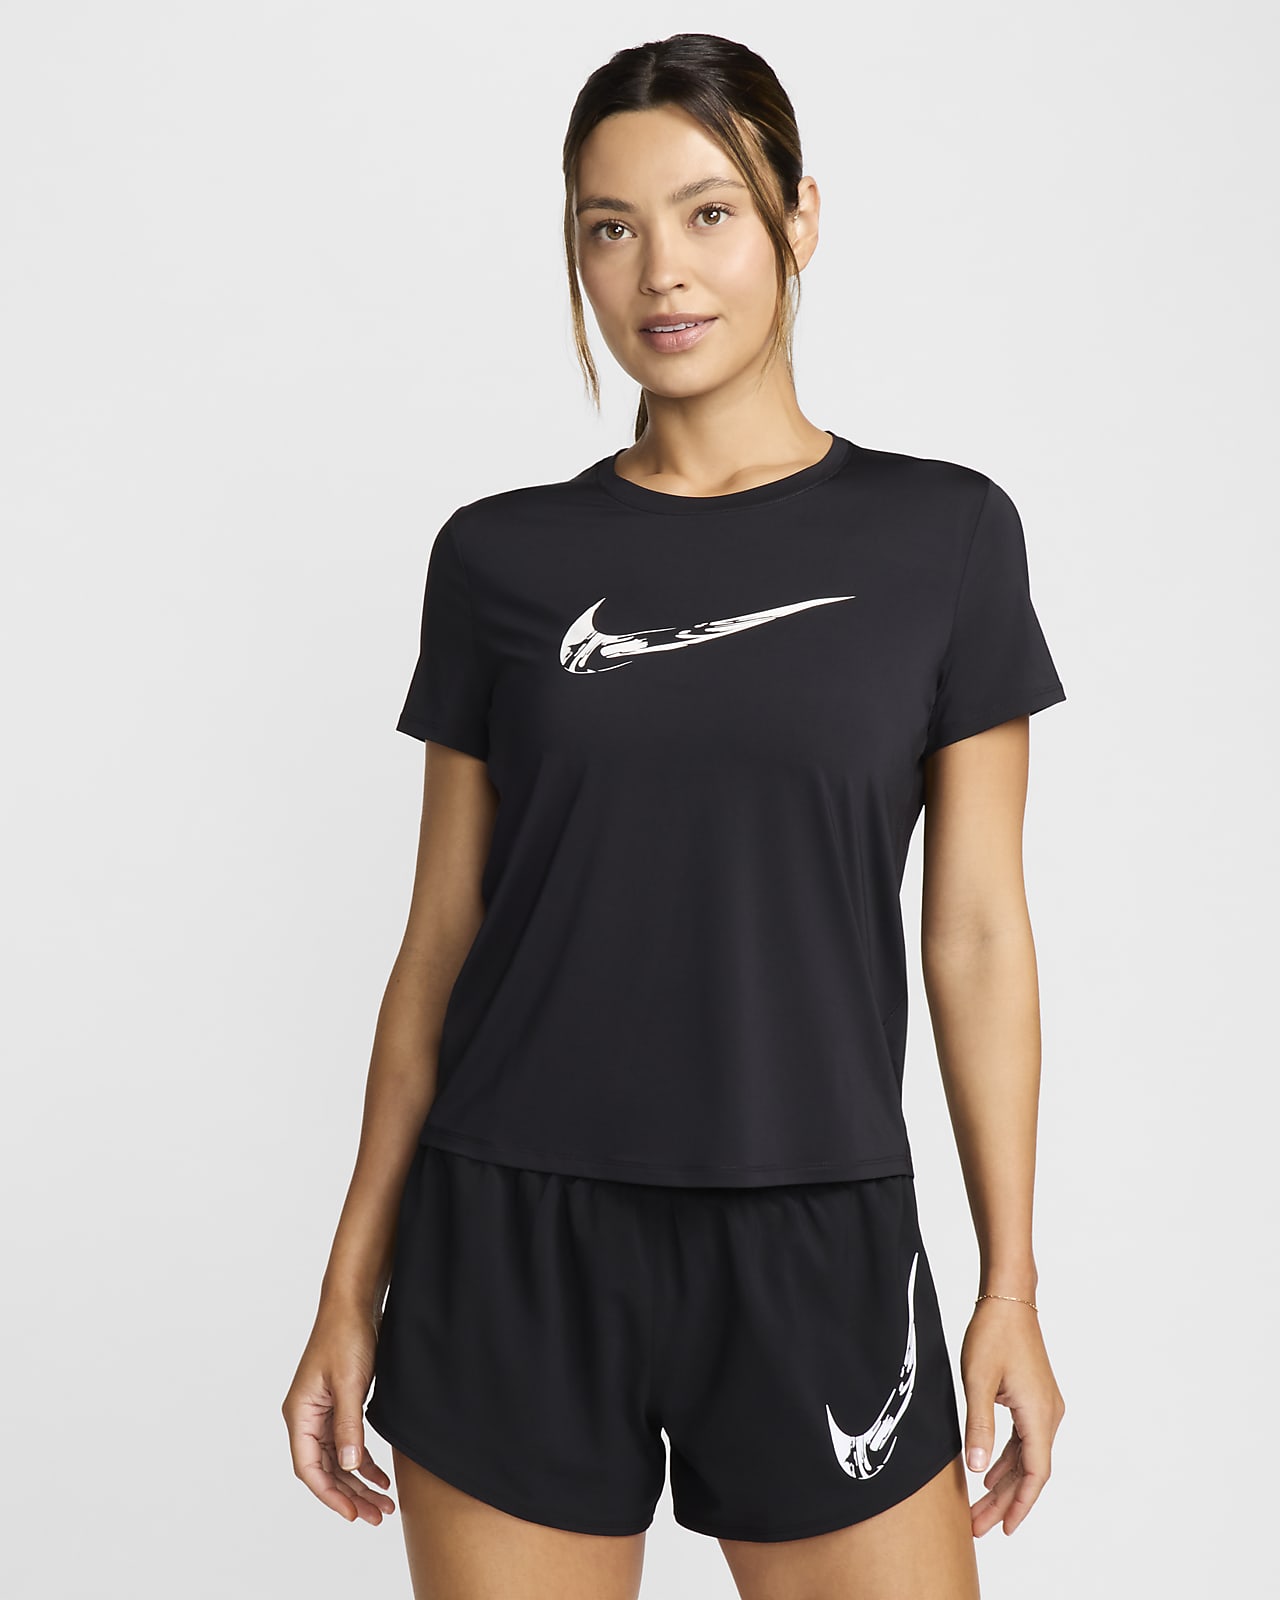 Nike One Women's Dri-FIT Short-Sleeve Graphic Running Top